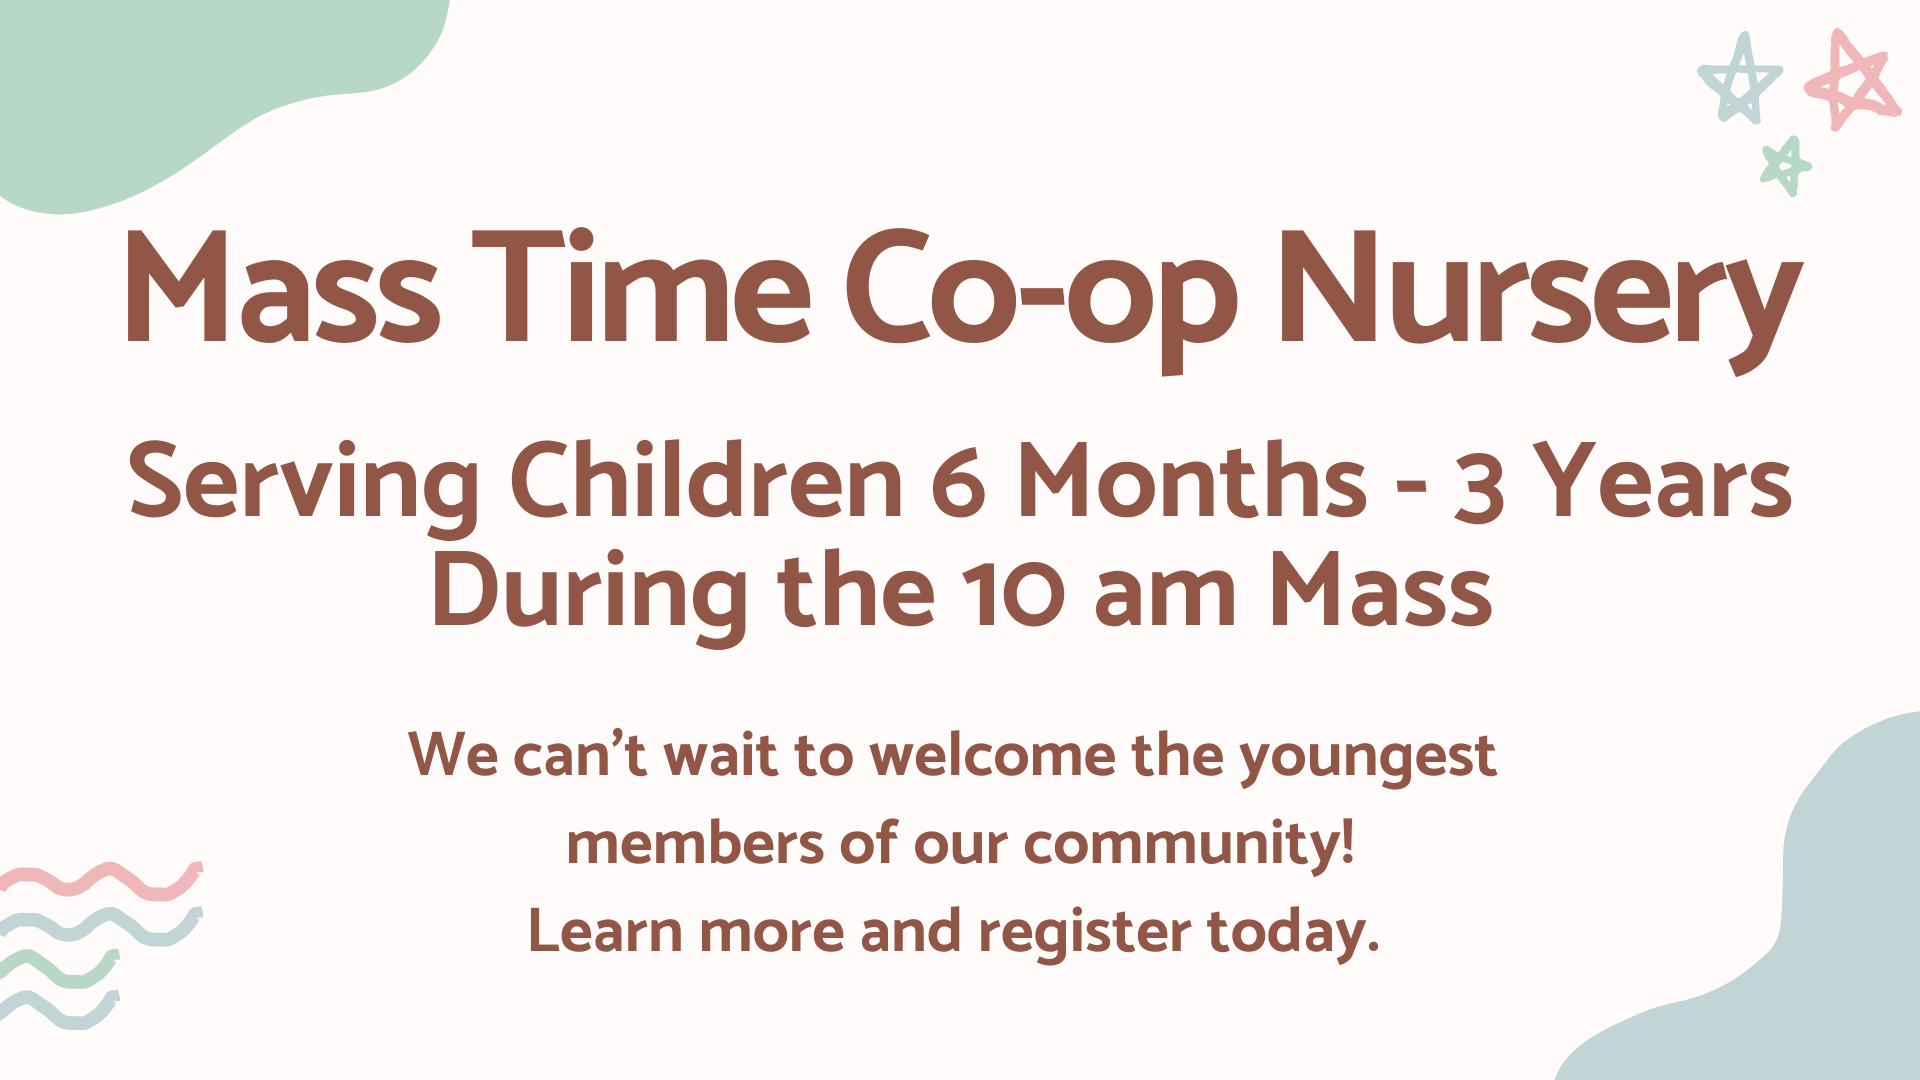 Mass Time Co-op Nursery